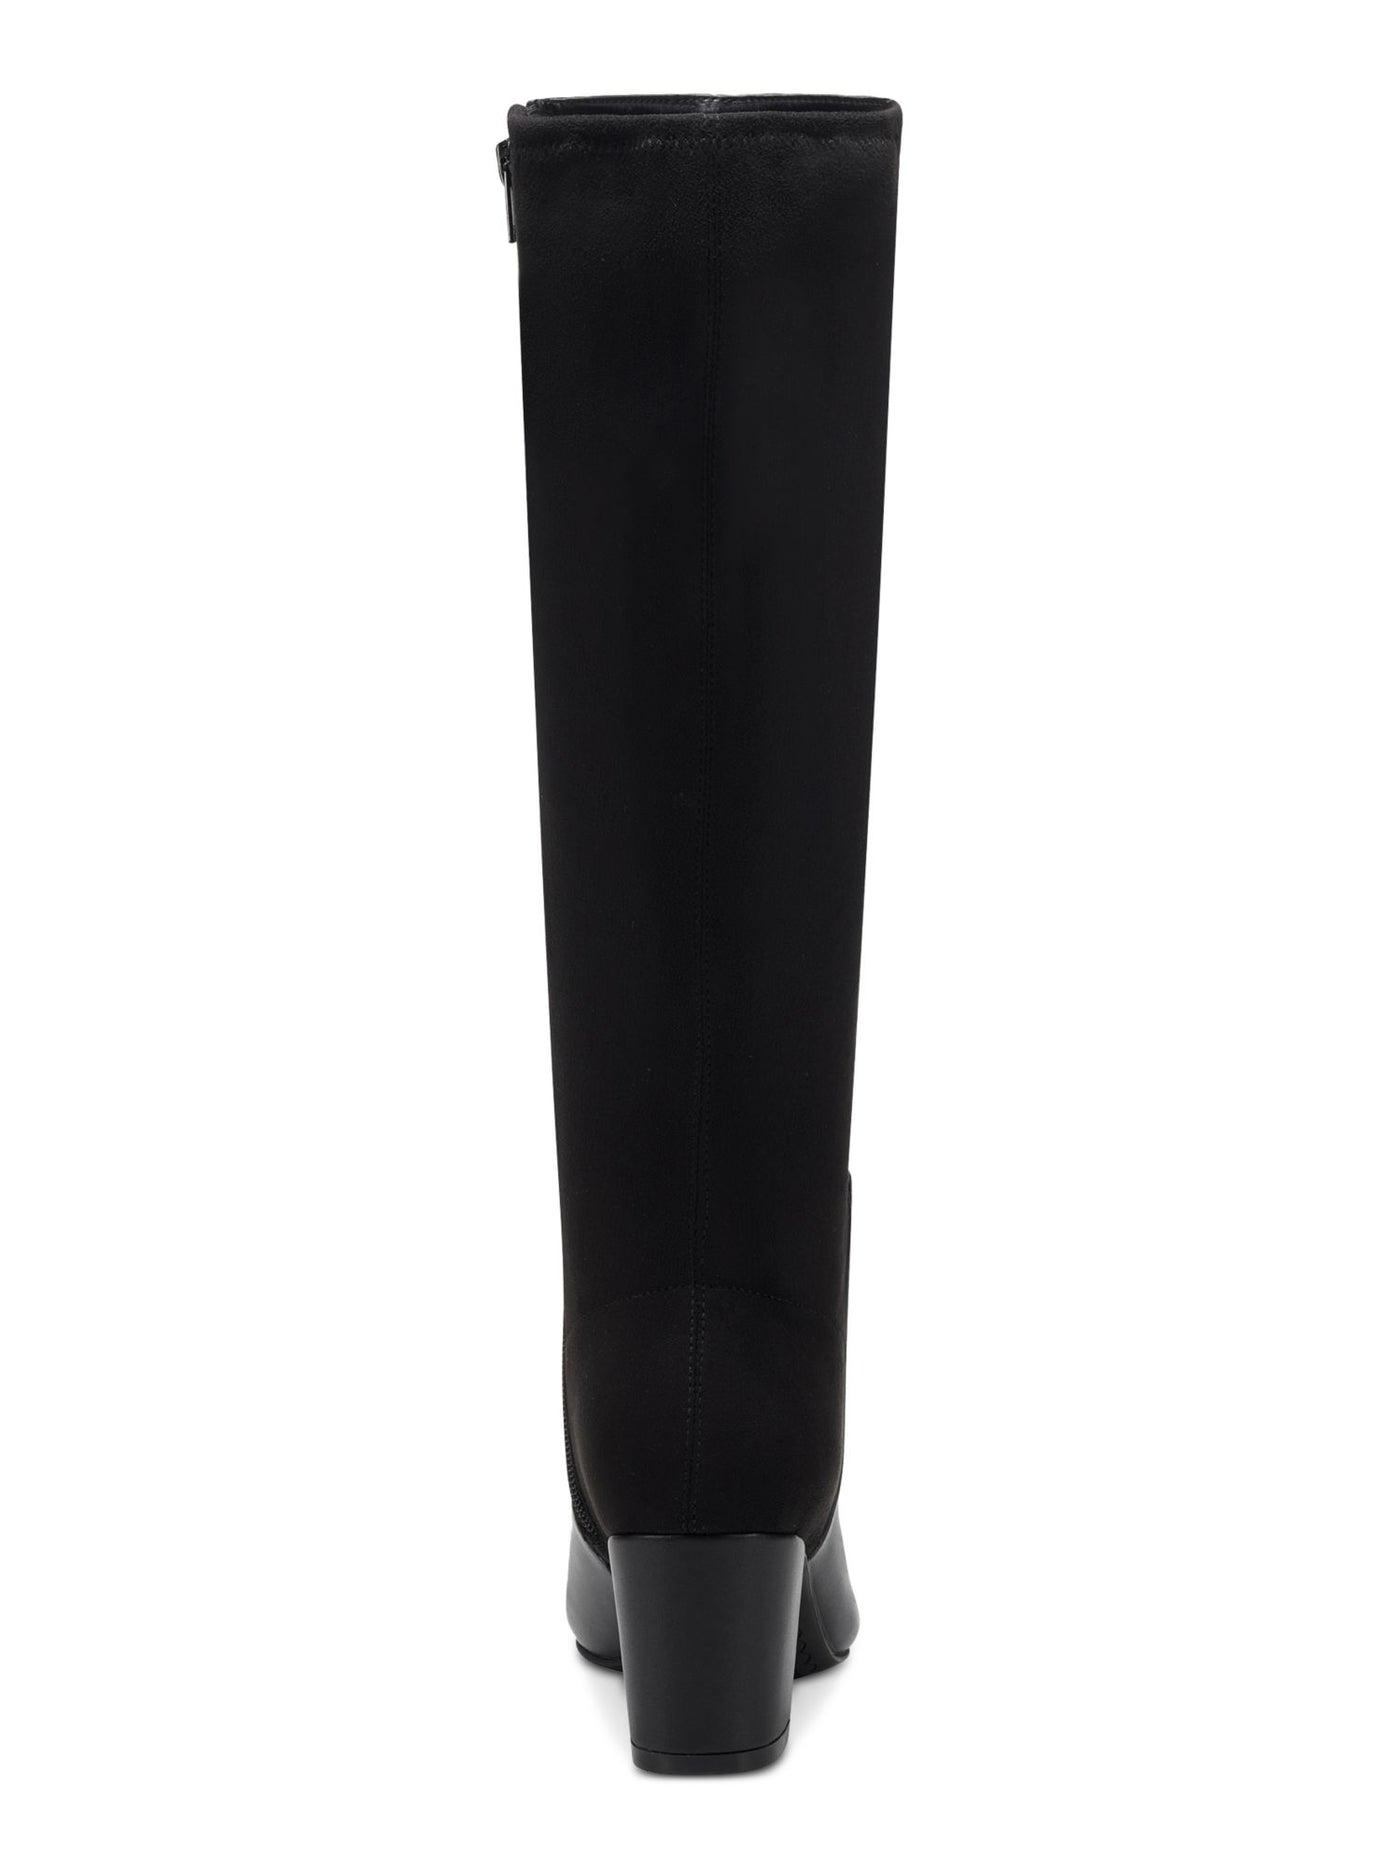 CHARTER CLUB Womens Black Comfort Sacaria Almond Toe Block Heel Zip-Up Dress Boots 6 M